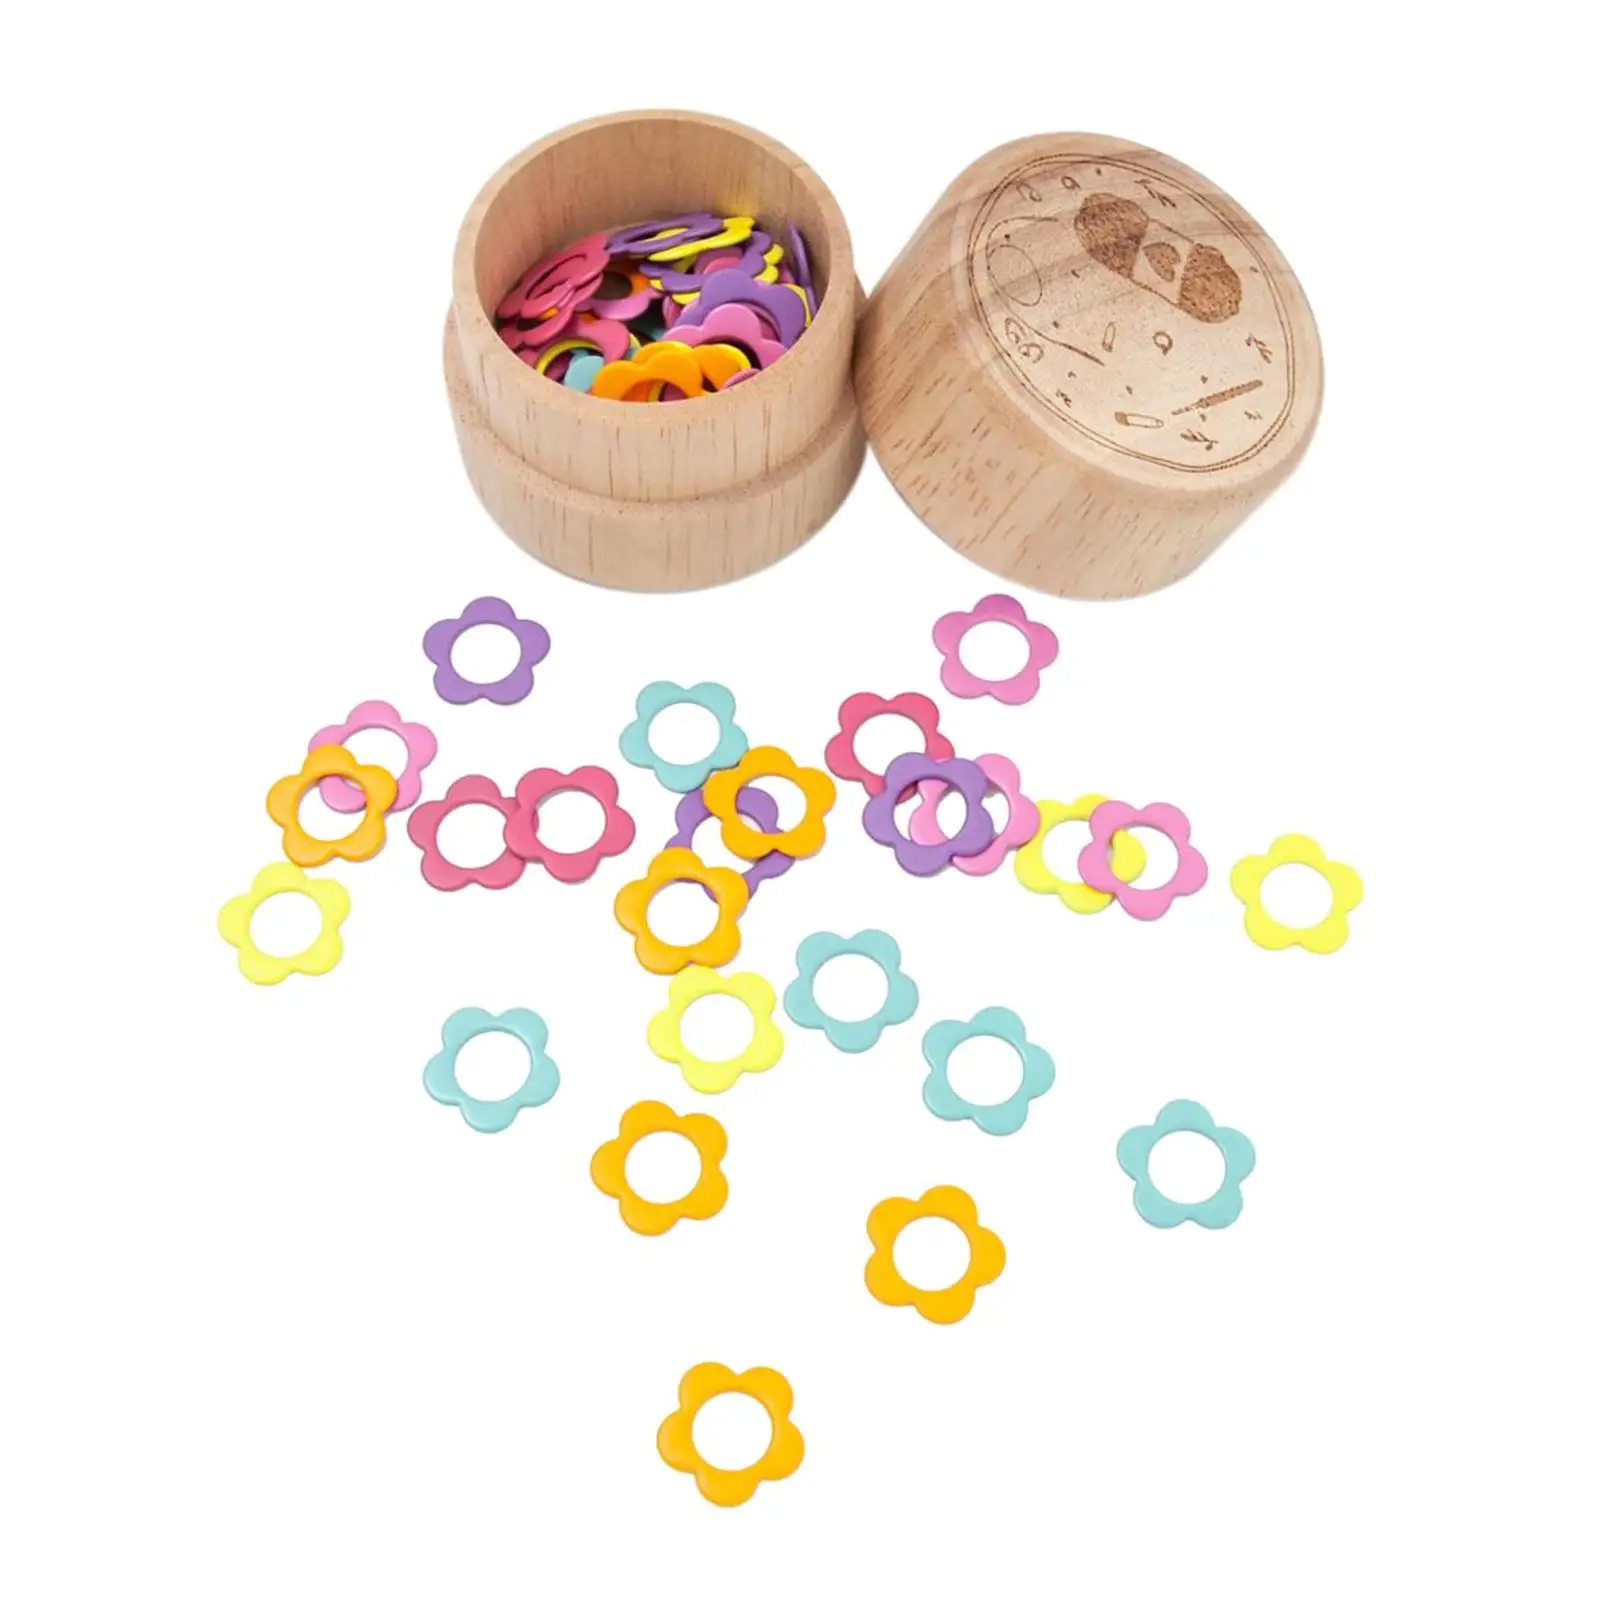 Crochet Knitting Markers Round Marking Circles Accessories Handicraft Crochet Marker